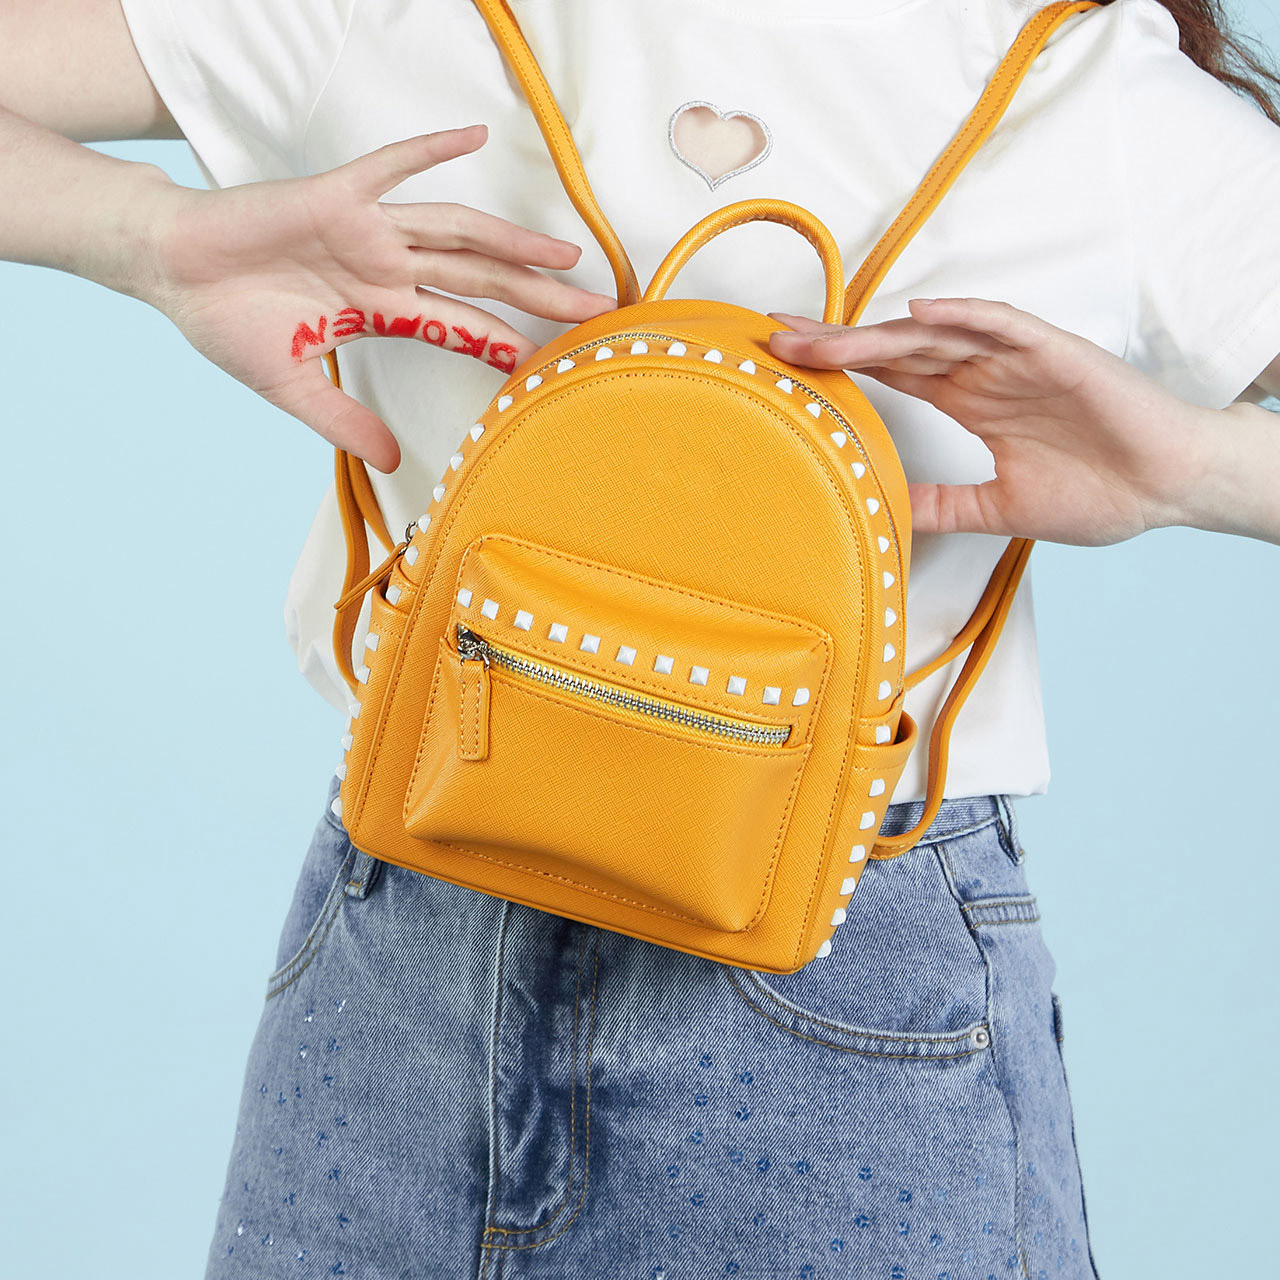 Do not Lai Mei small bag women 2020 tide spring and summer new shoulder bag bag fashion rivet student mini backpack